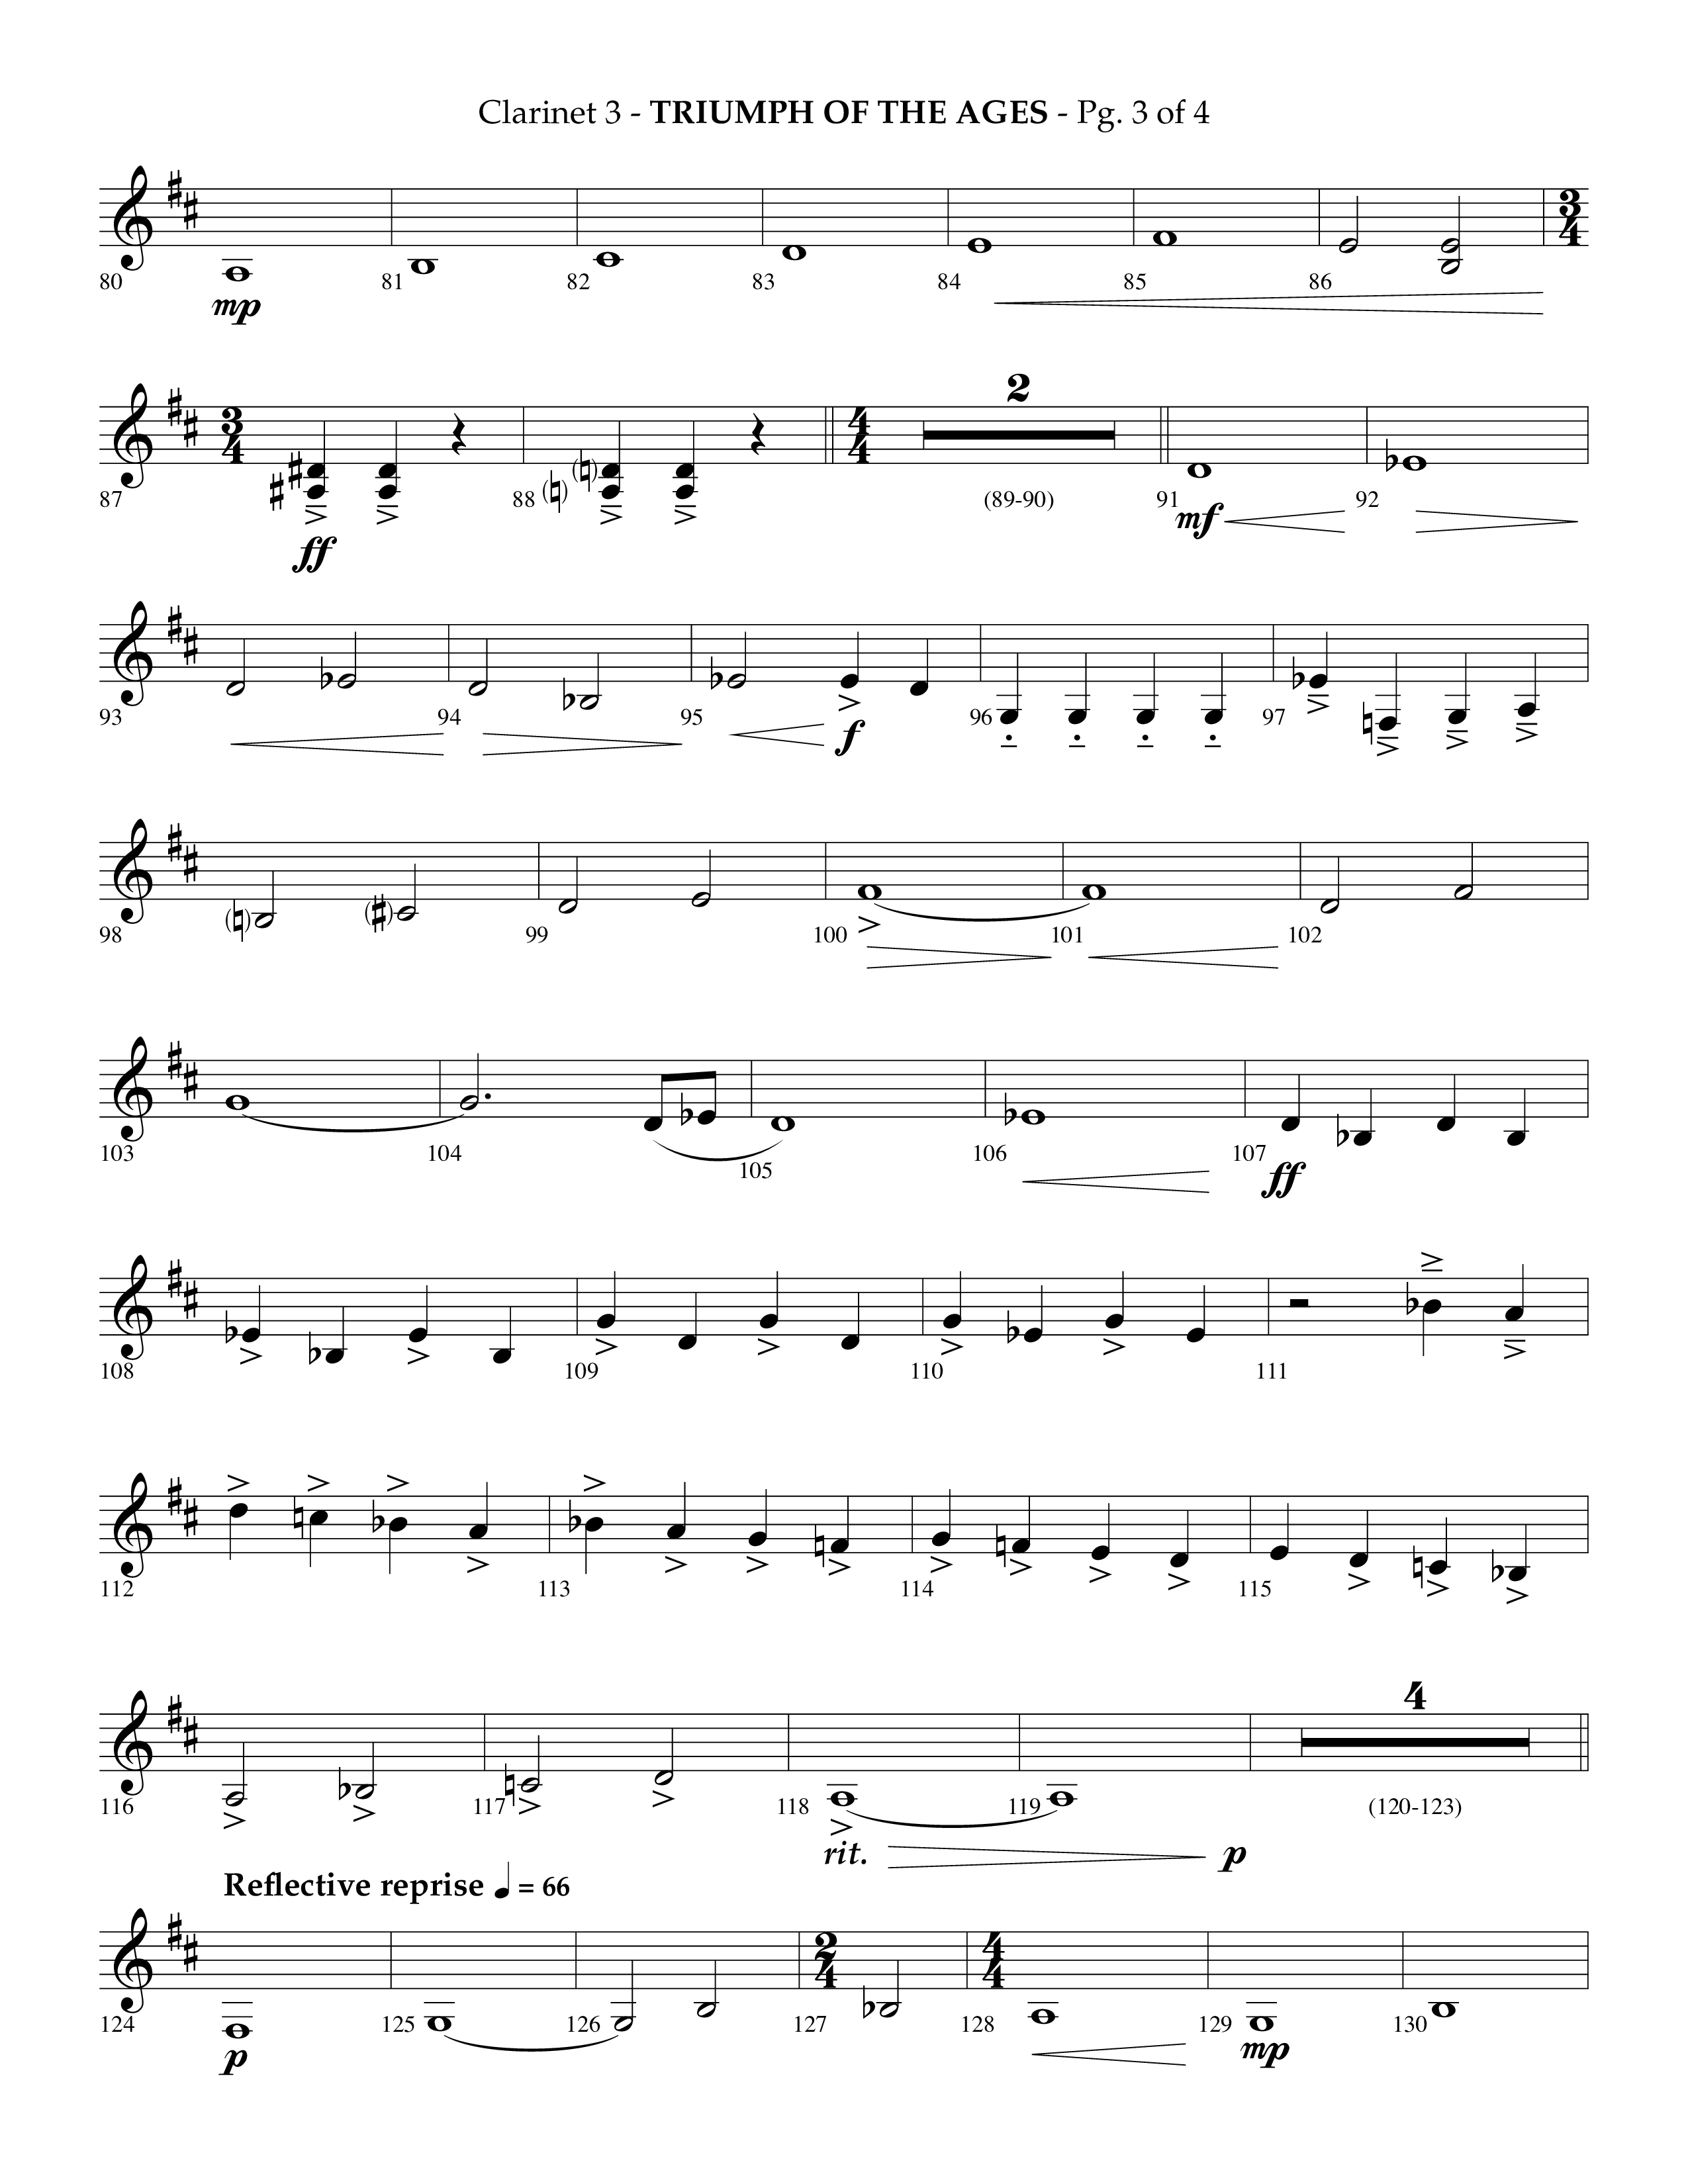 Triumph Of The Ages (Choral Anthem SATB) Clarinet 3 (Lifeway Choral / Arr. Phillip Keveren)